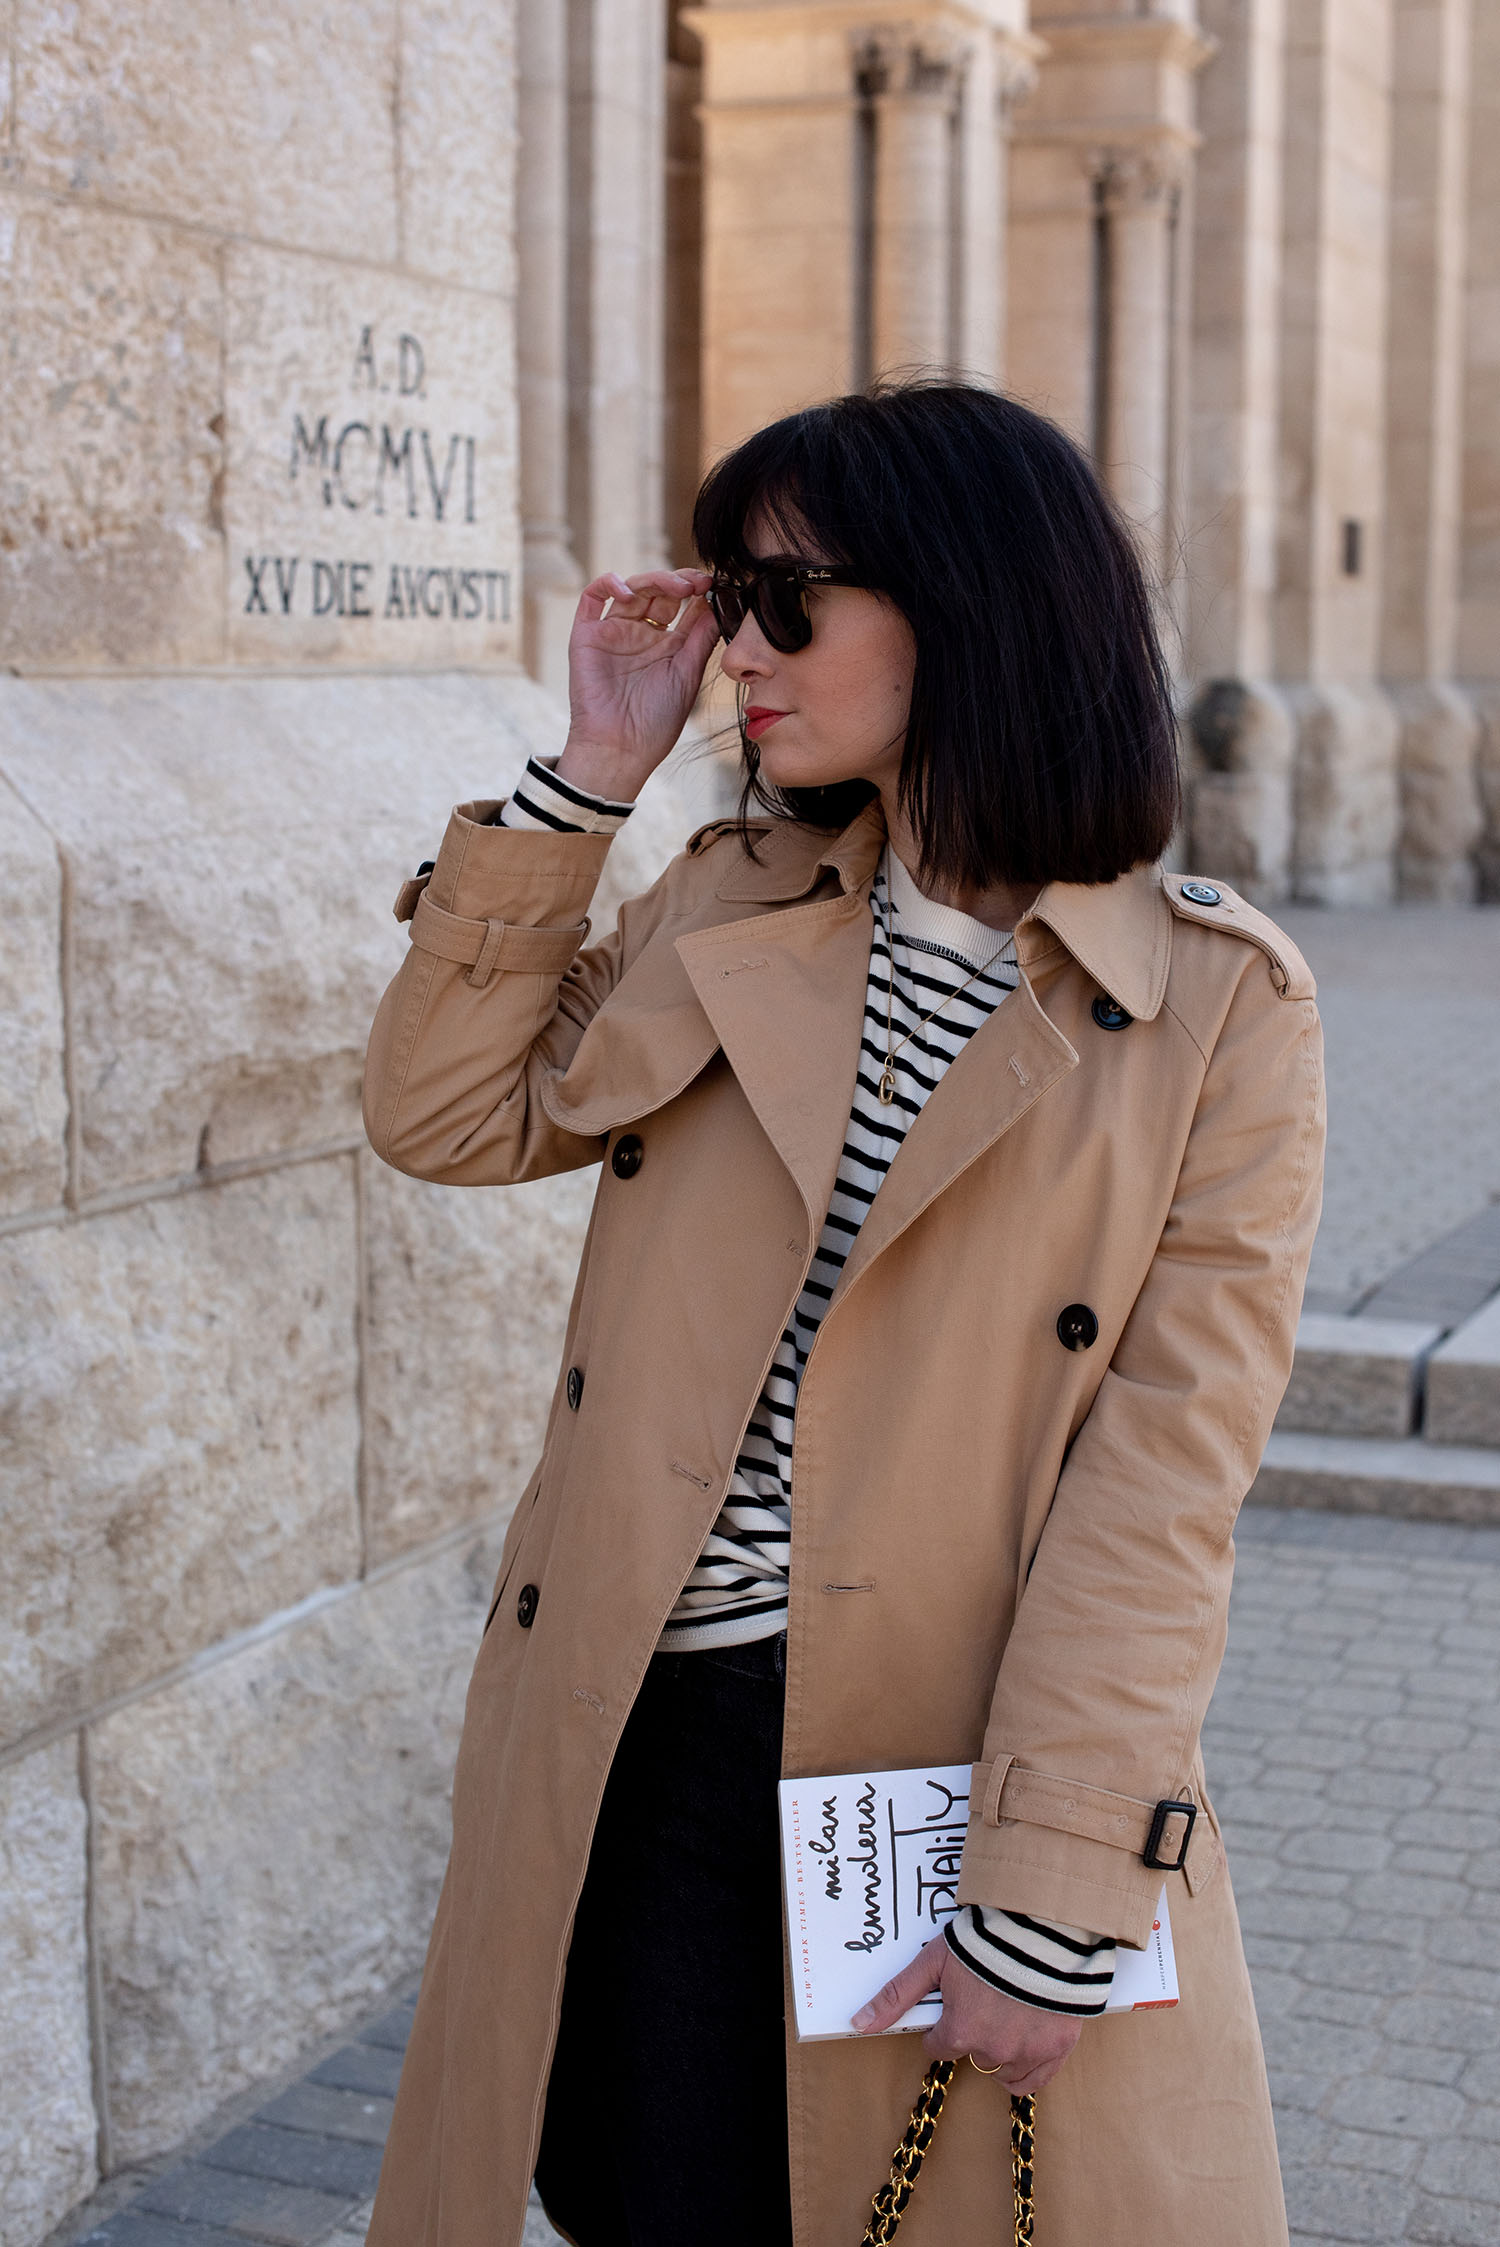 Coco & Voltaire - Rayban Wayfarer sunglasses, Zara stripe top, Mango trench coat